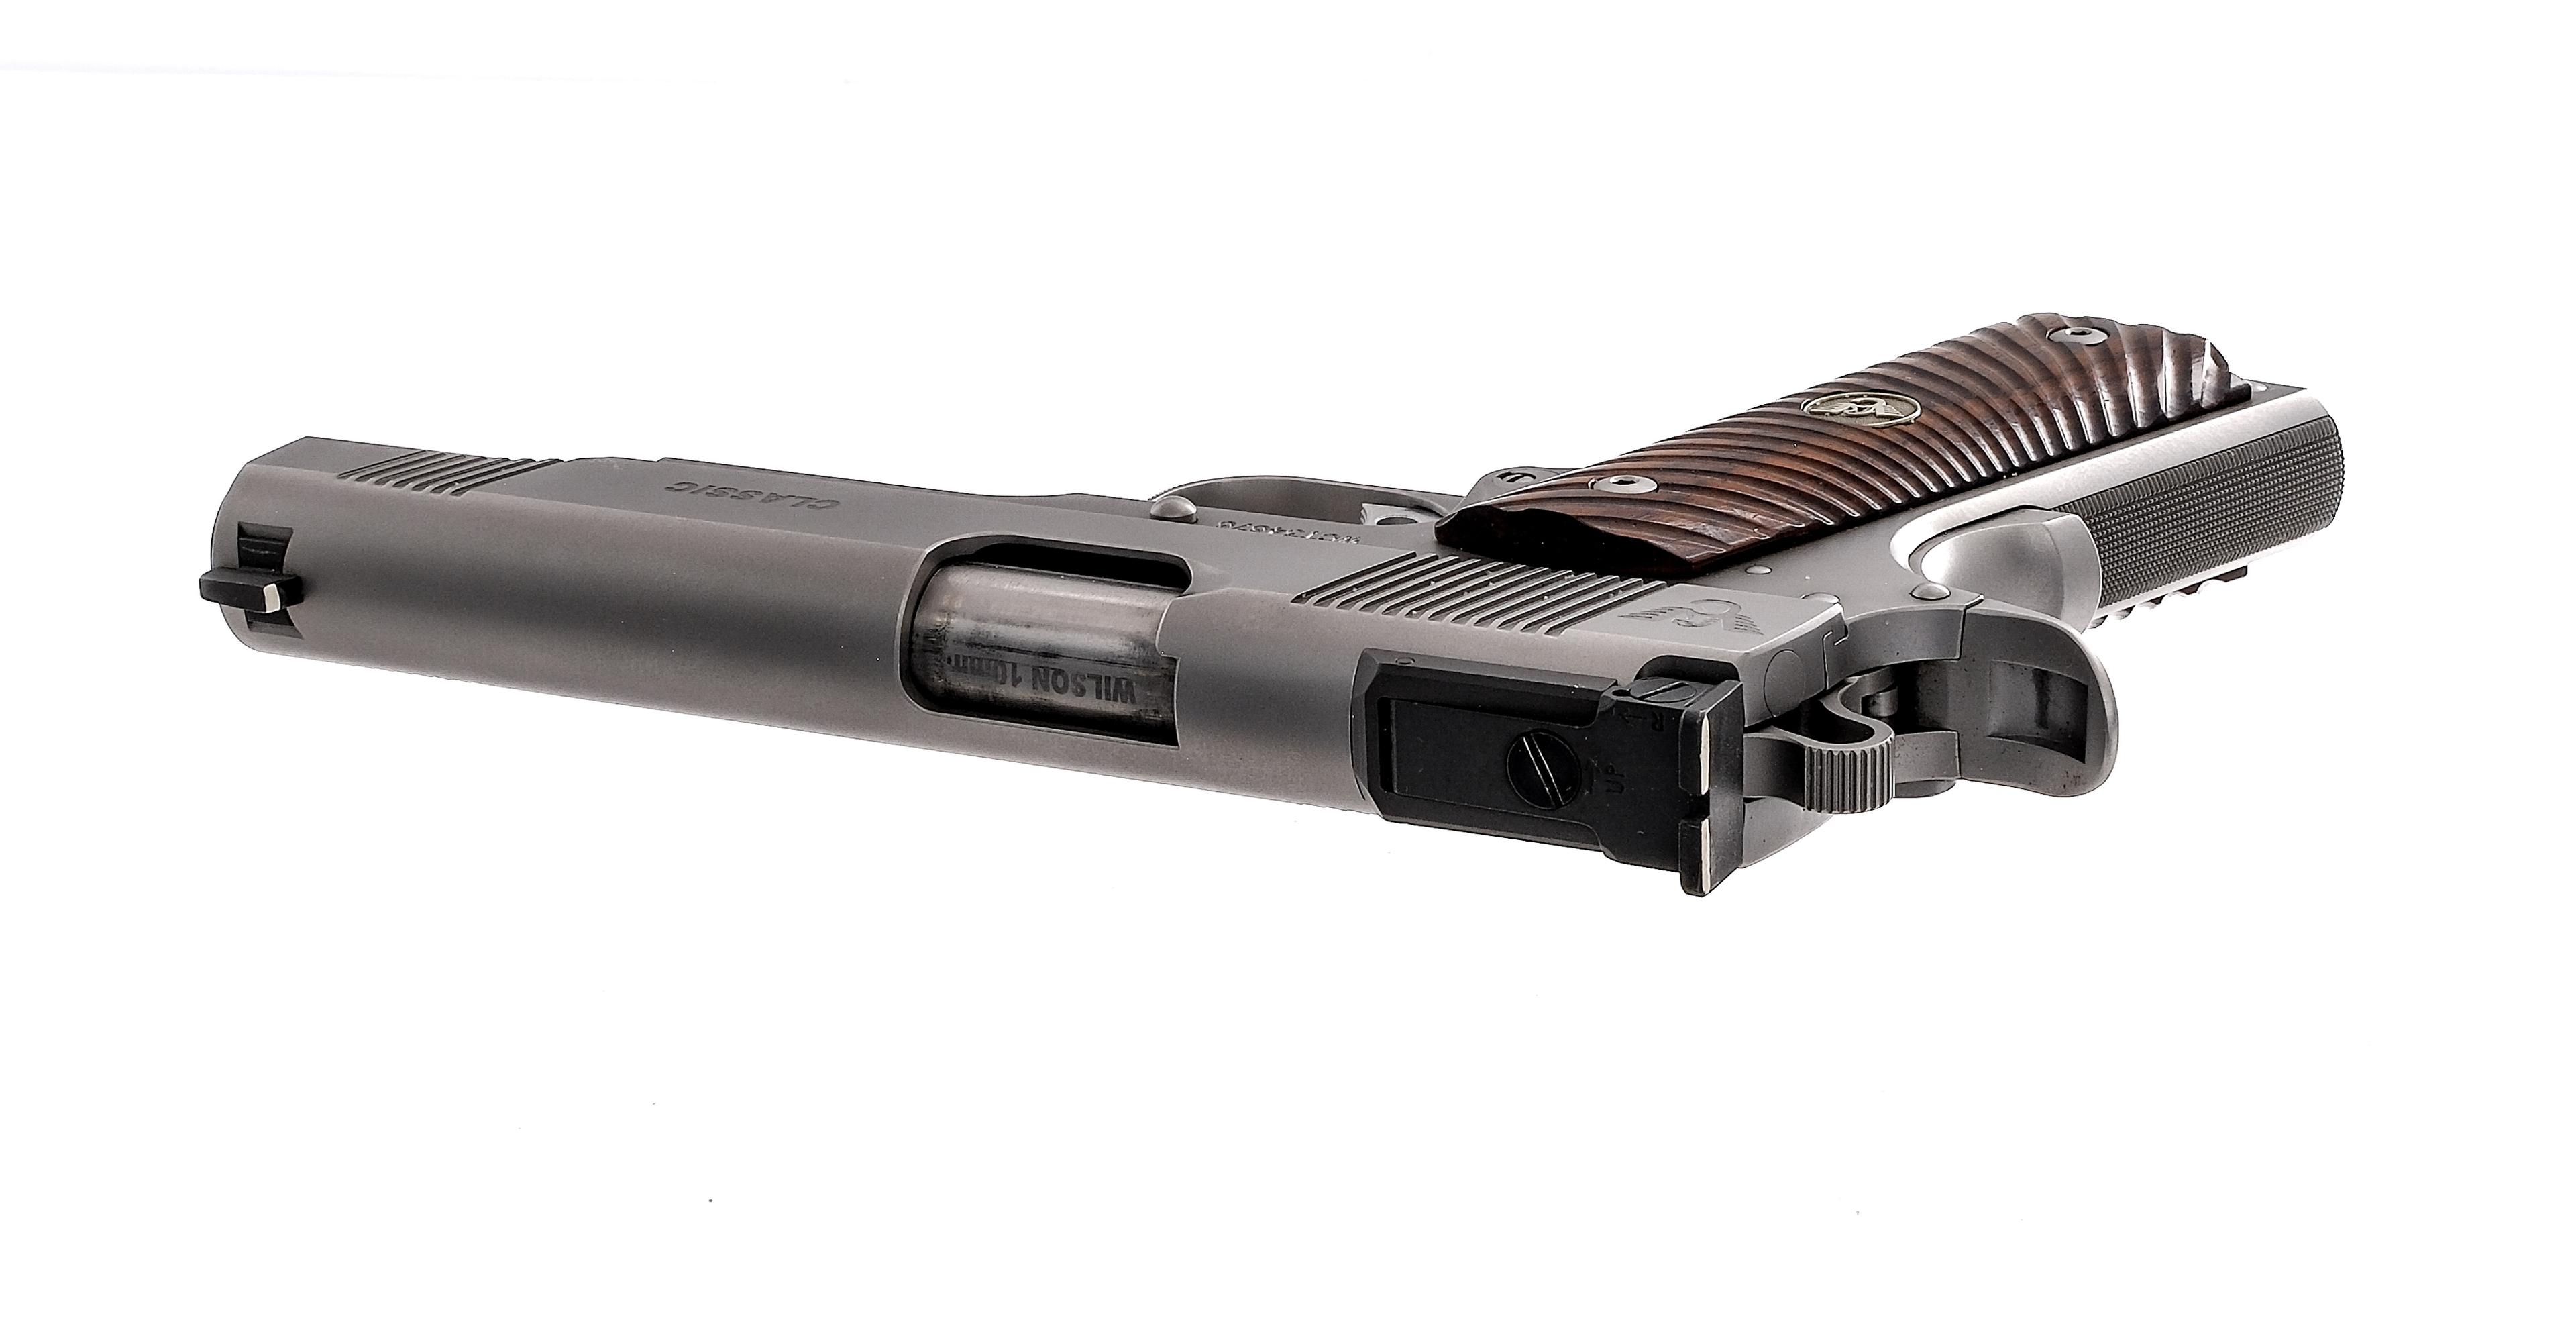 Wilson Combat Classic 10mm Semi Auto Pistol